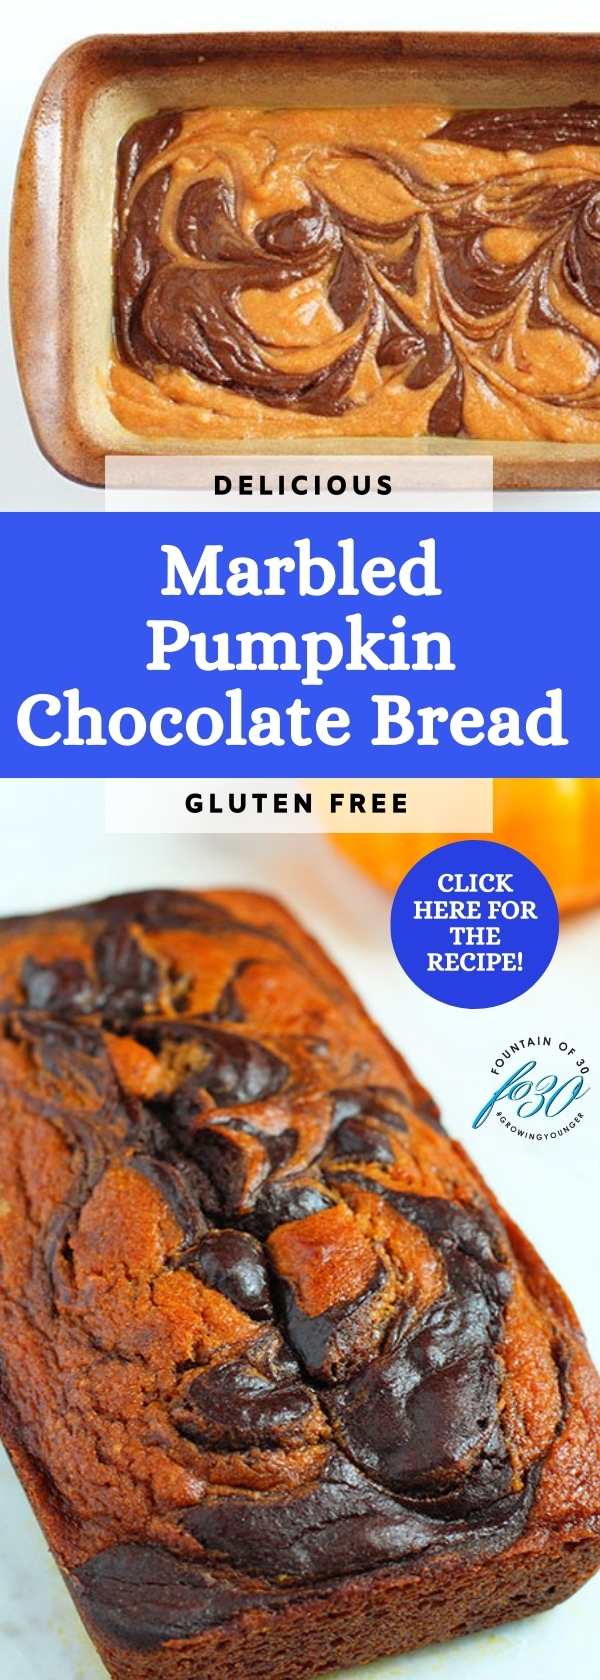 marbled chocolate pumpkin bread recipe gluten free fountainof30